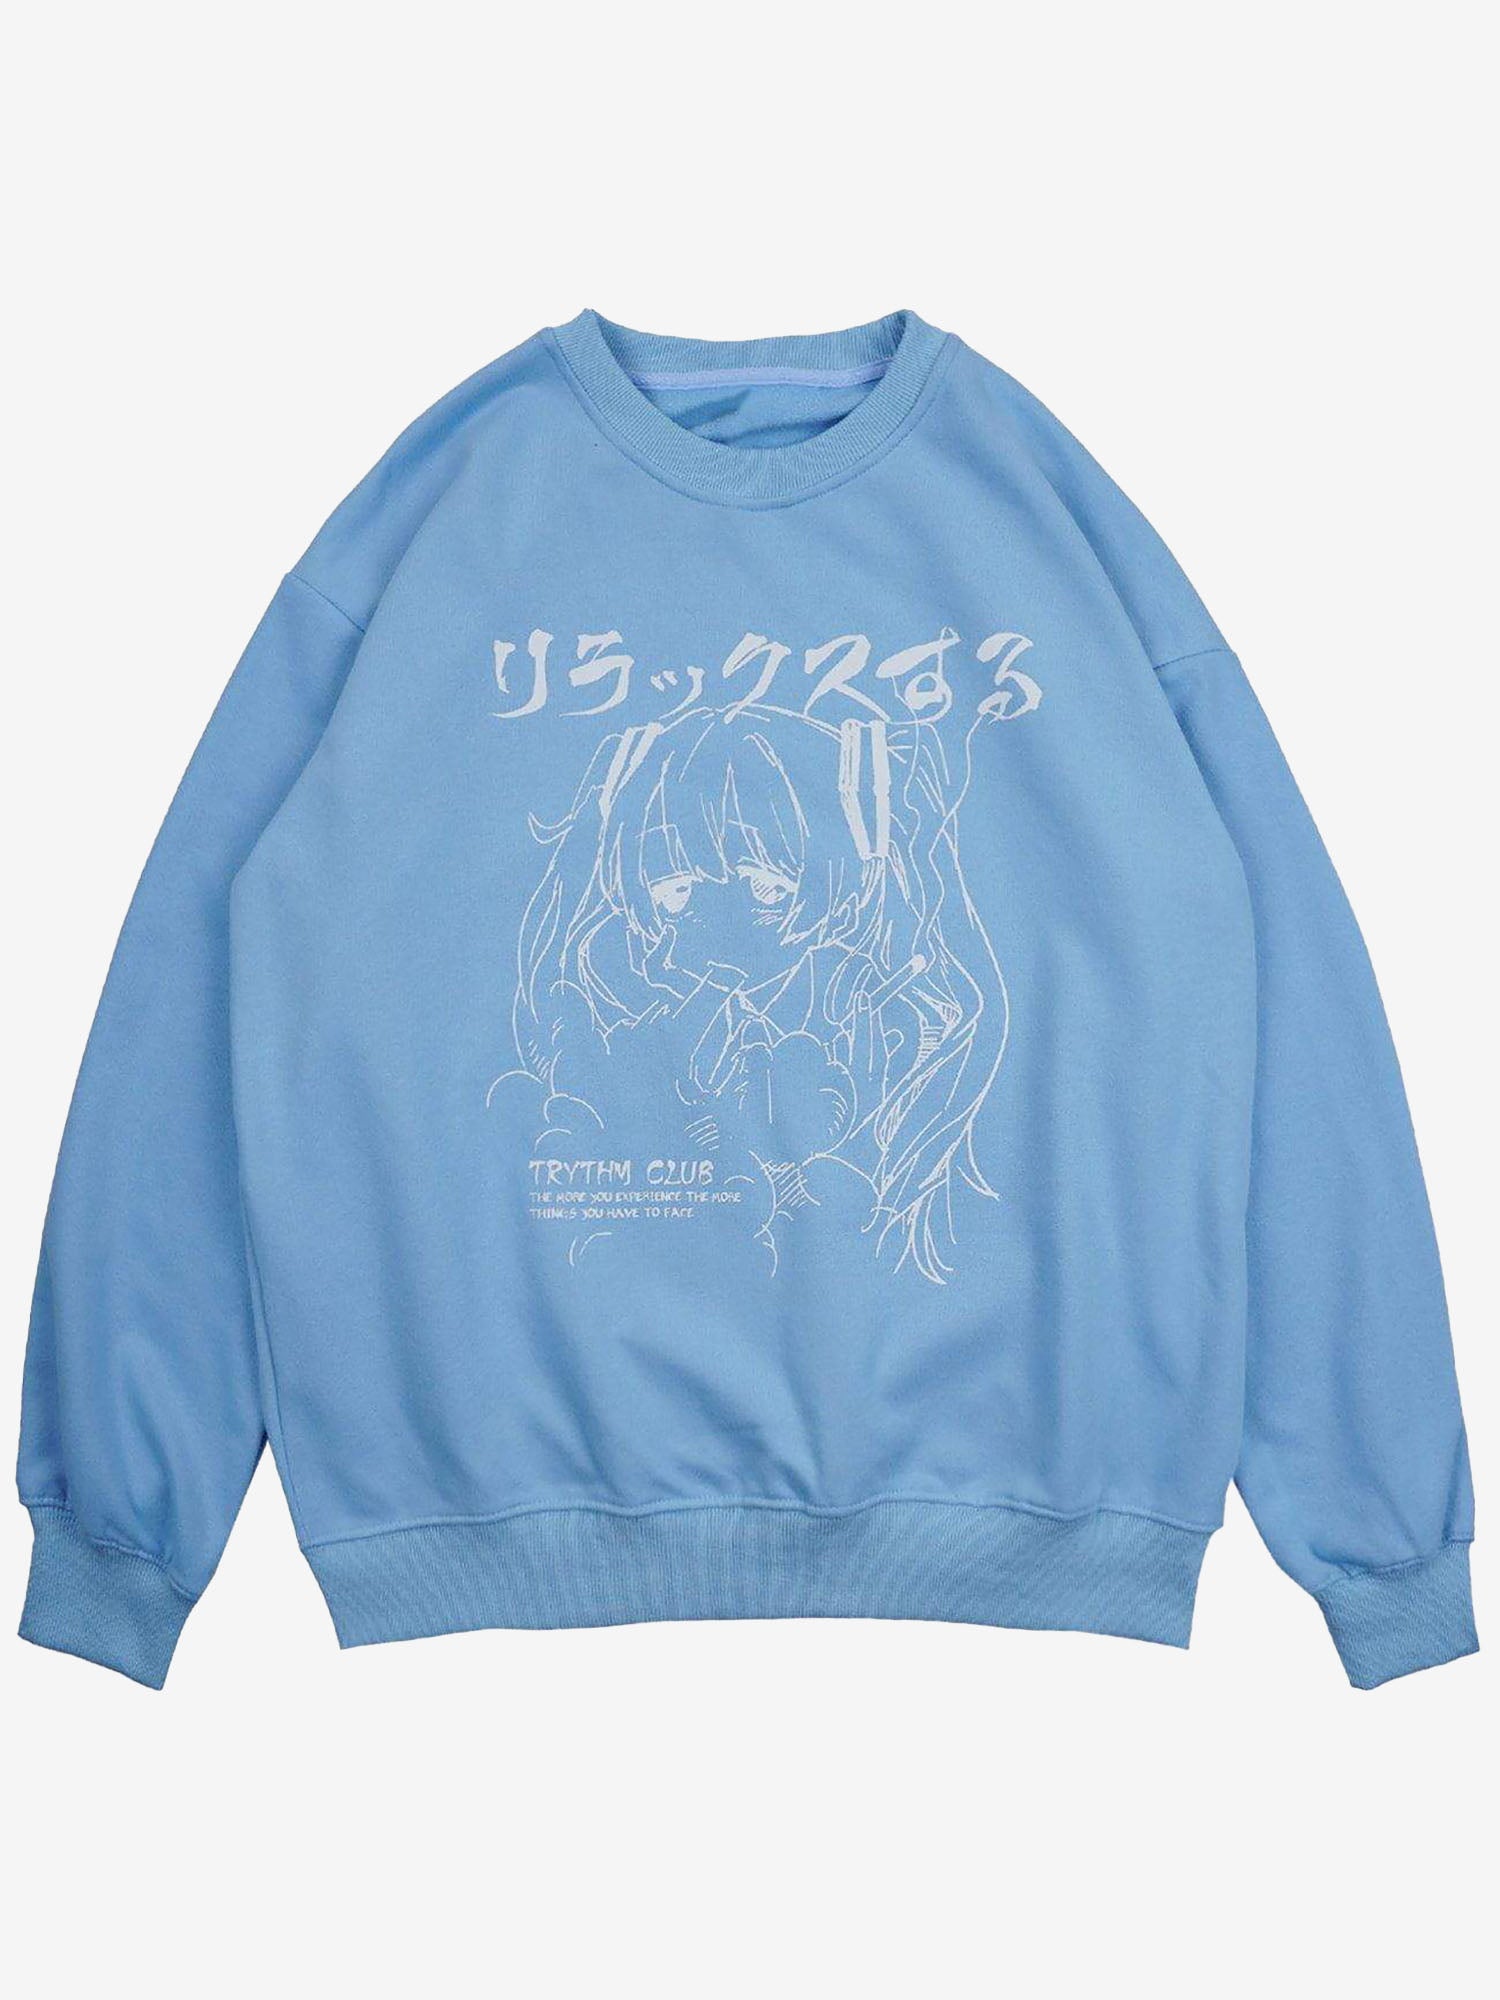 JUSTNOTAG Japanese Cartoon Anime Girl Print Sweatshirt